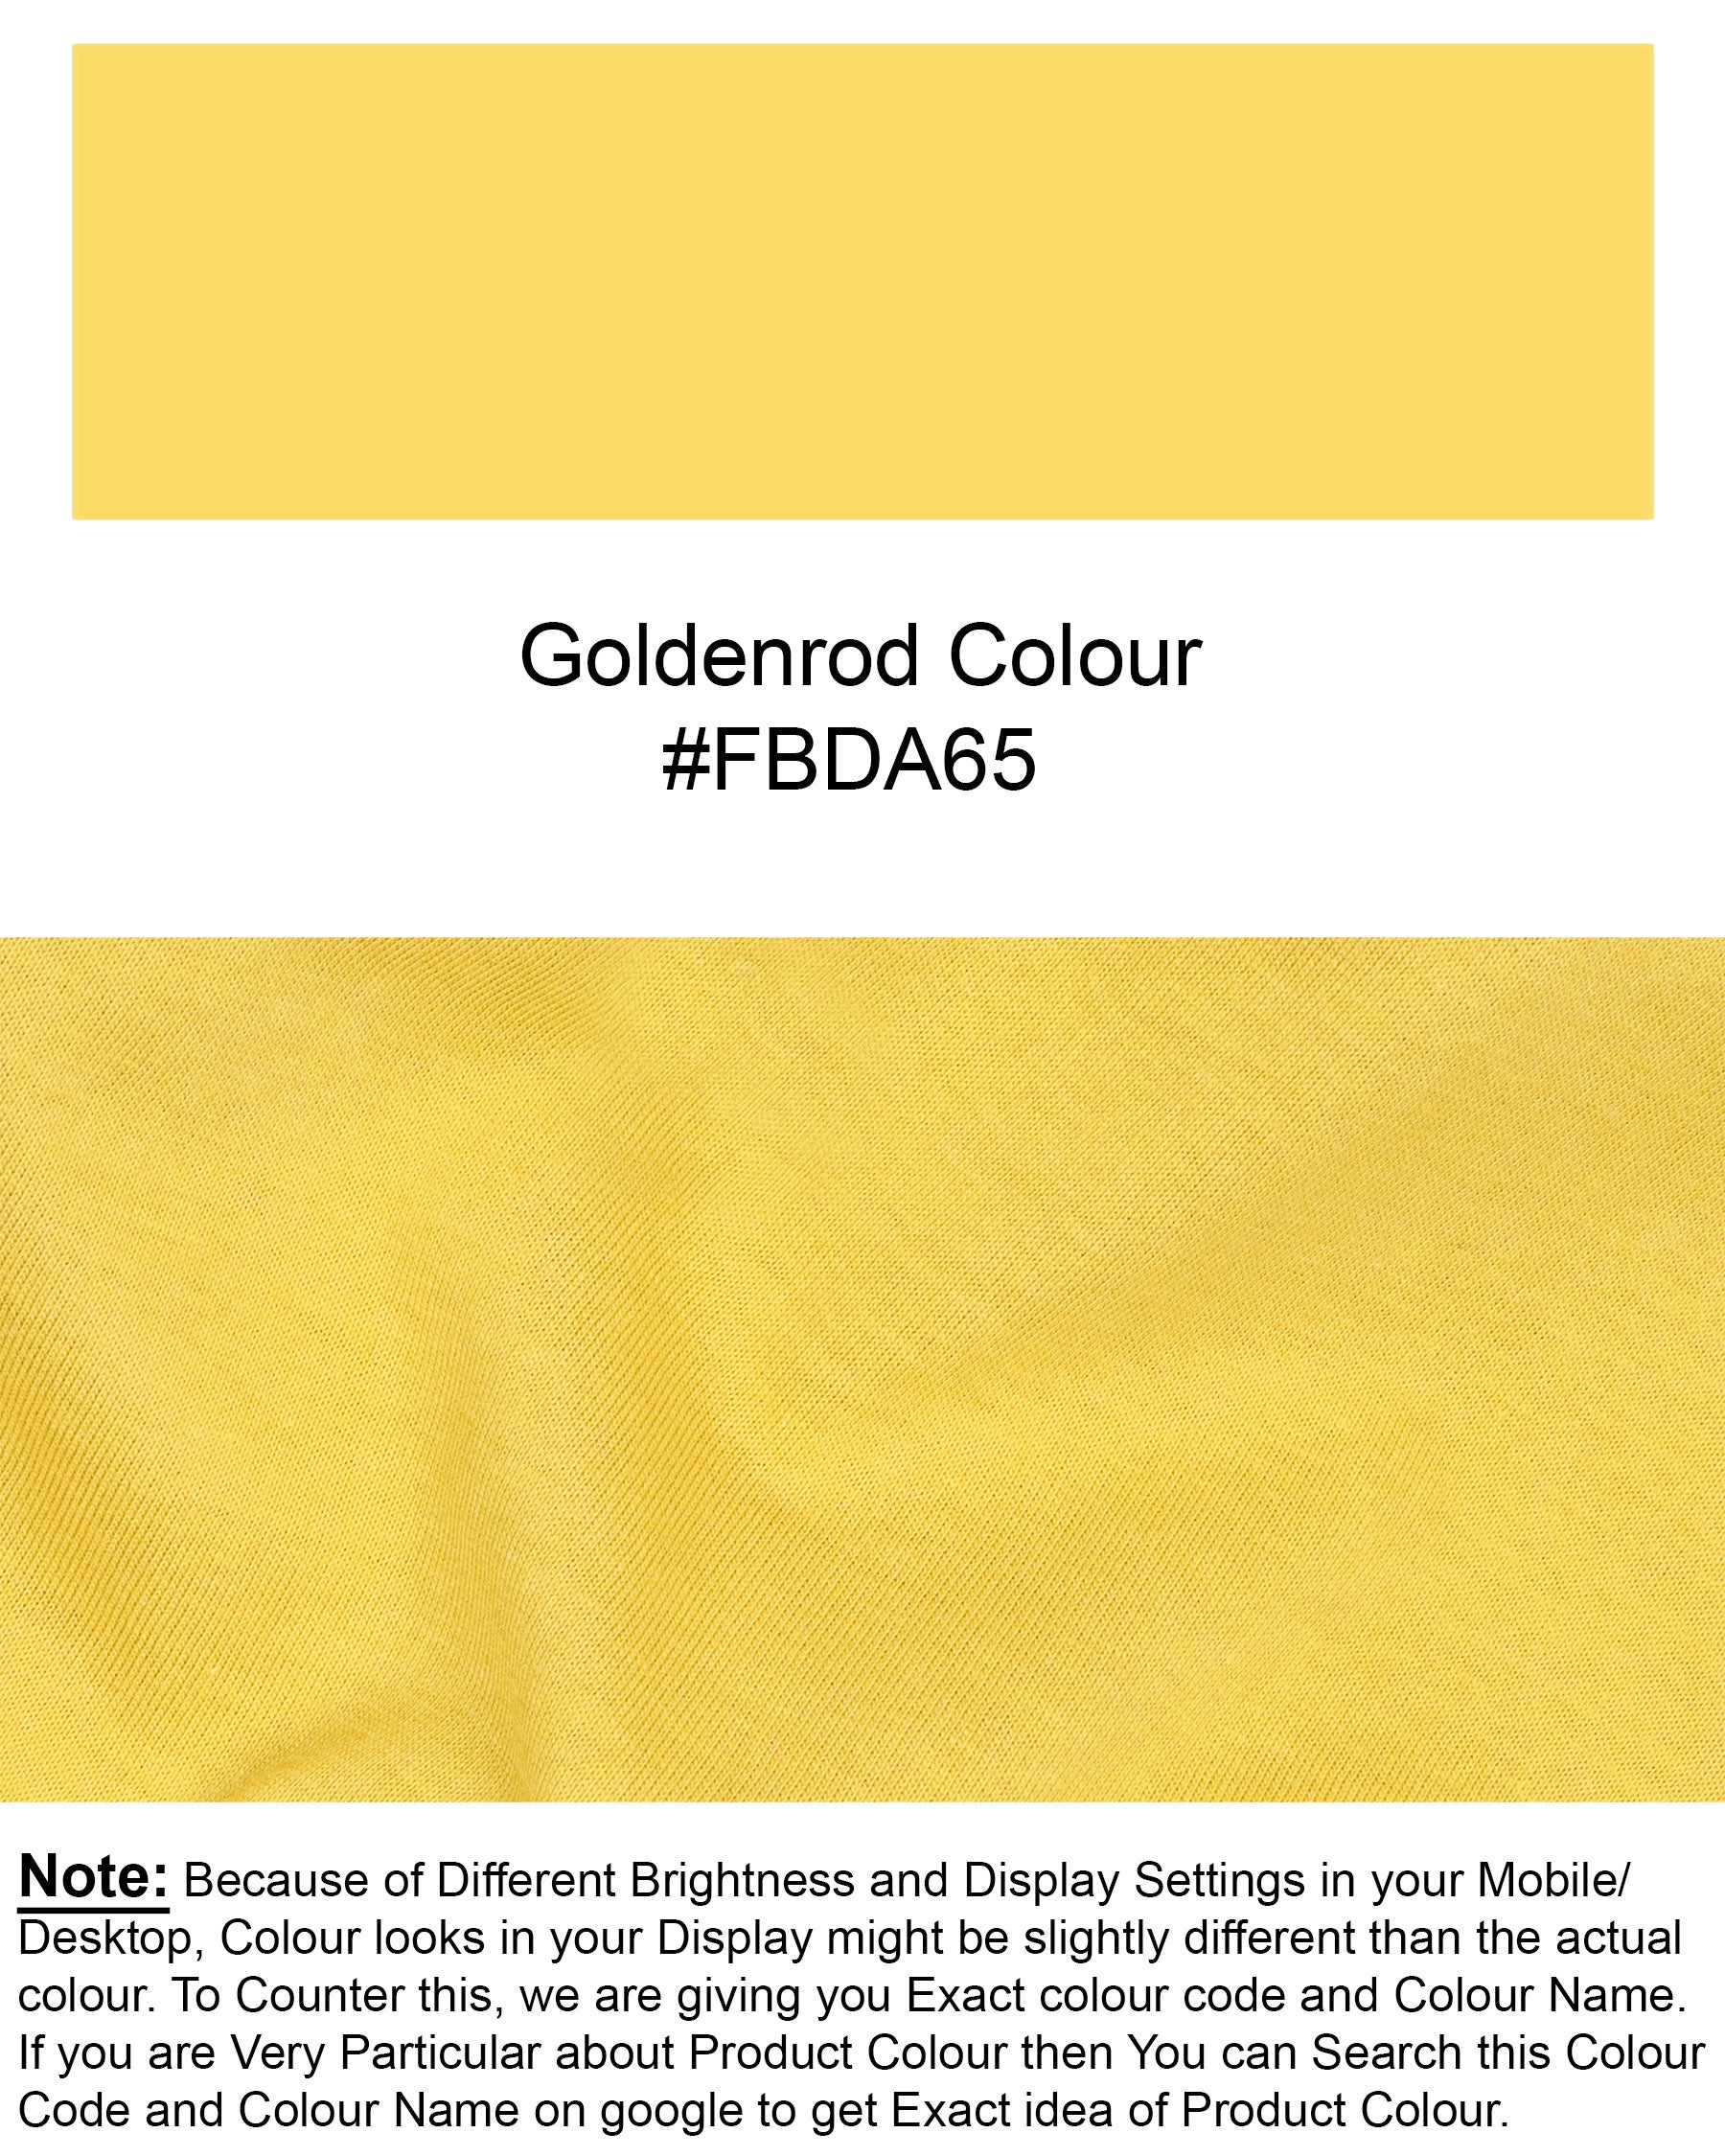 Goldenrod Yellow Full Sleeve Premium Cotton Jersey Sweatshirt TS459-S, TS459-M, TS459-L, TS459-XL, TS459-XXL